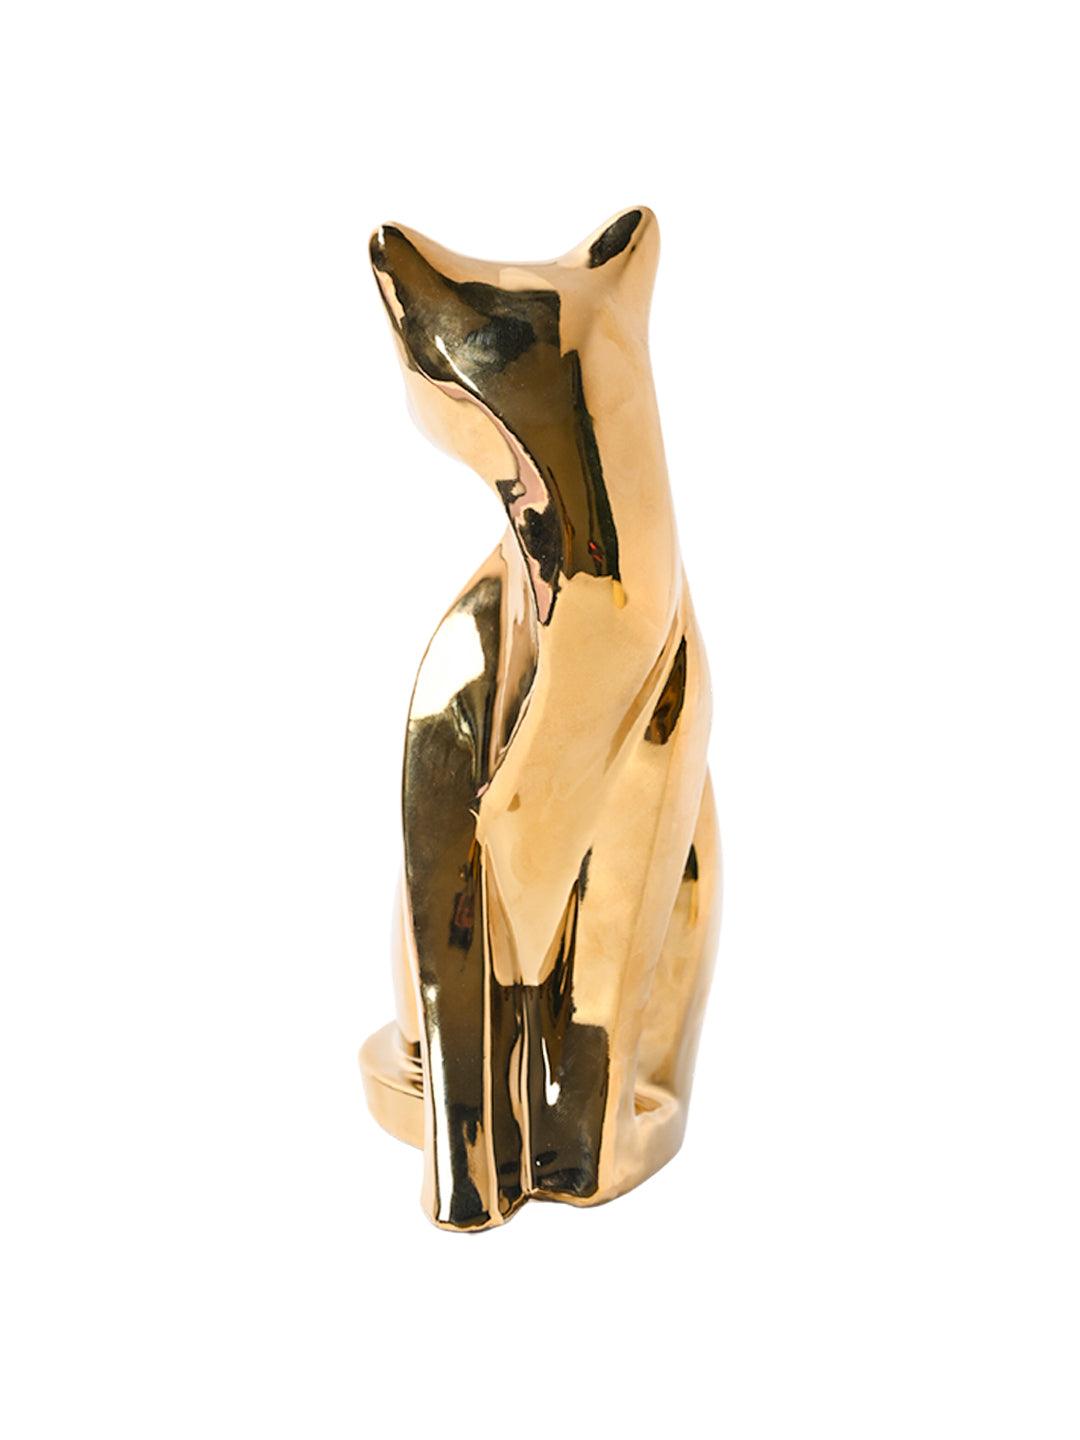 Golden Cat Statue Figurine